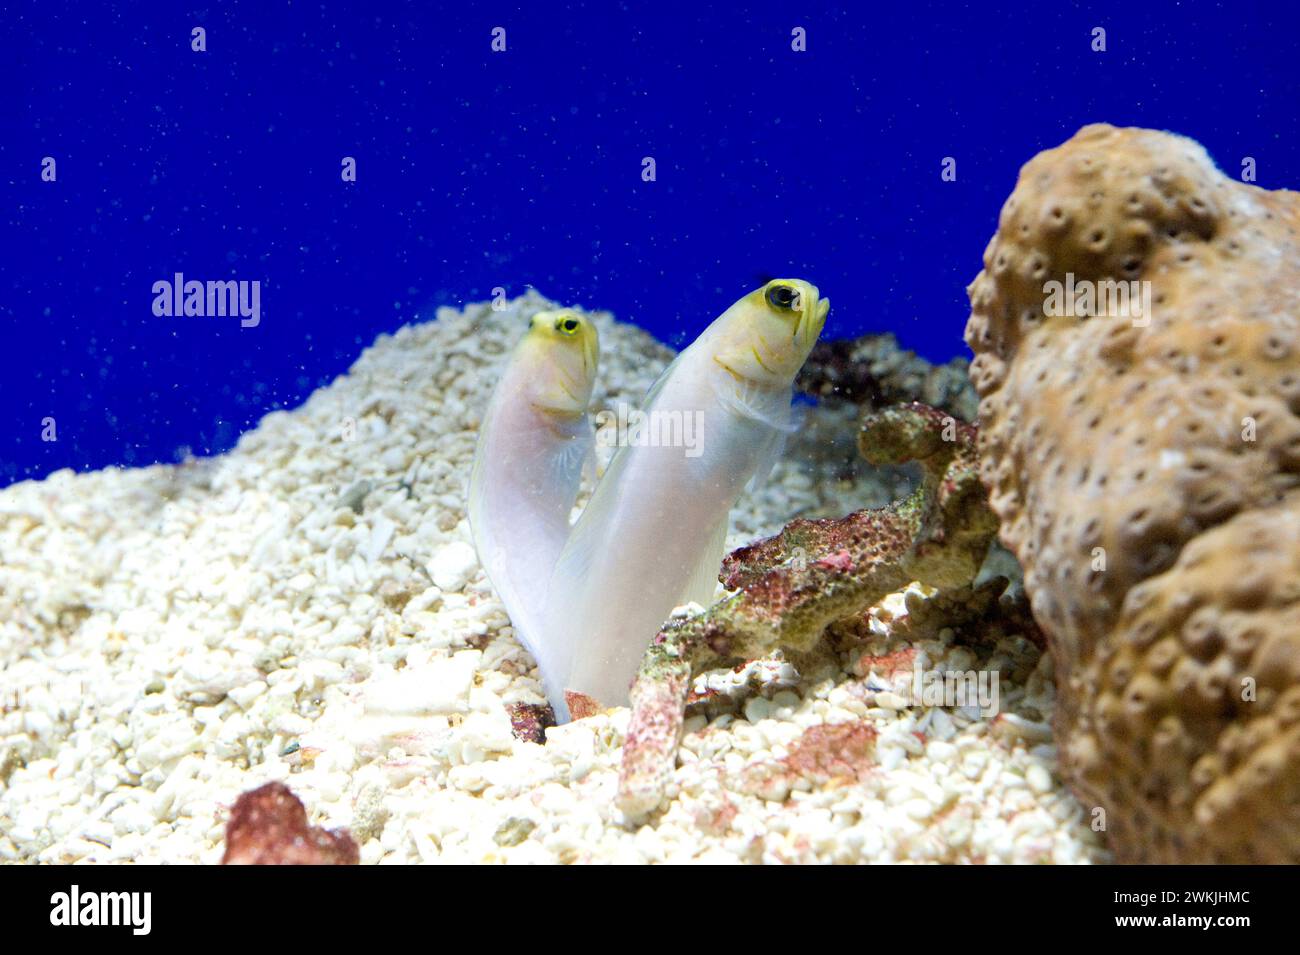 Yellowhead jawfish (Opistognathus aurifrons) is a marine fish native to Caribbean Sea. Stock Photo